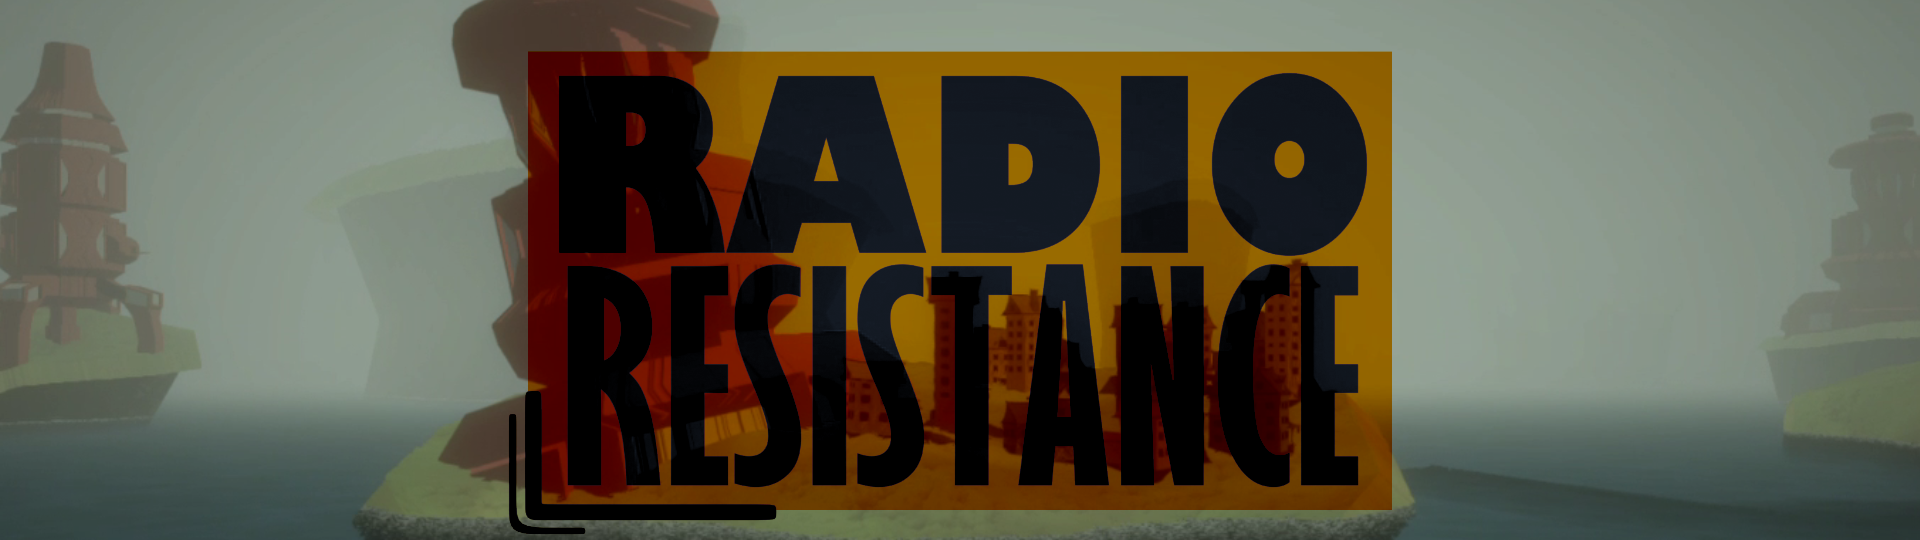 RADIO RESISTANCE